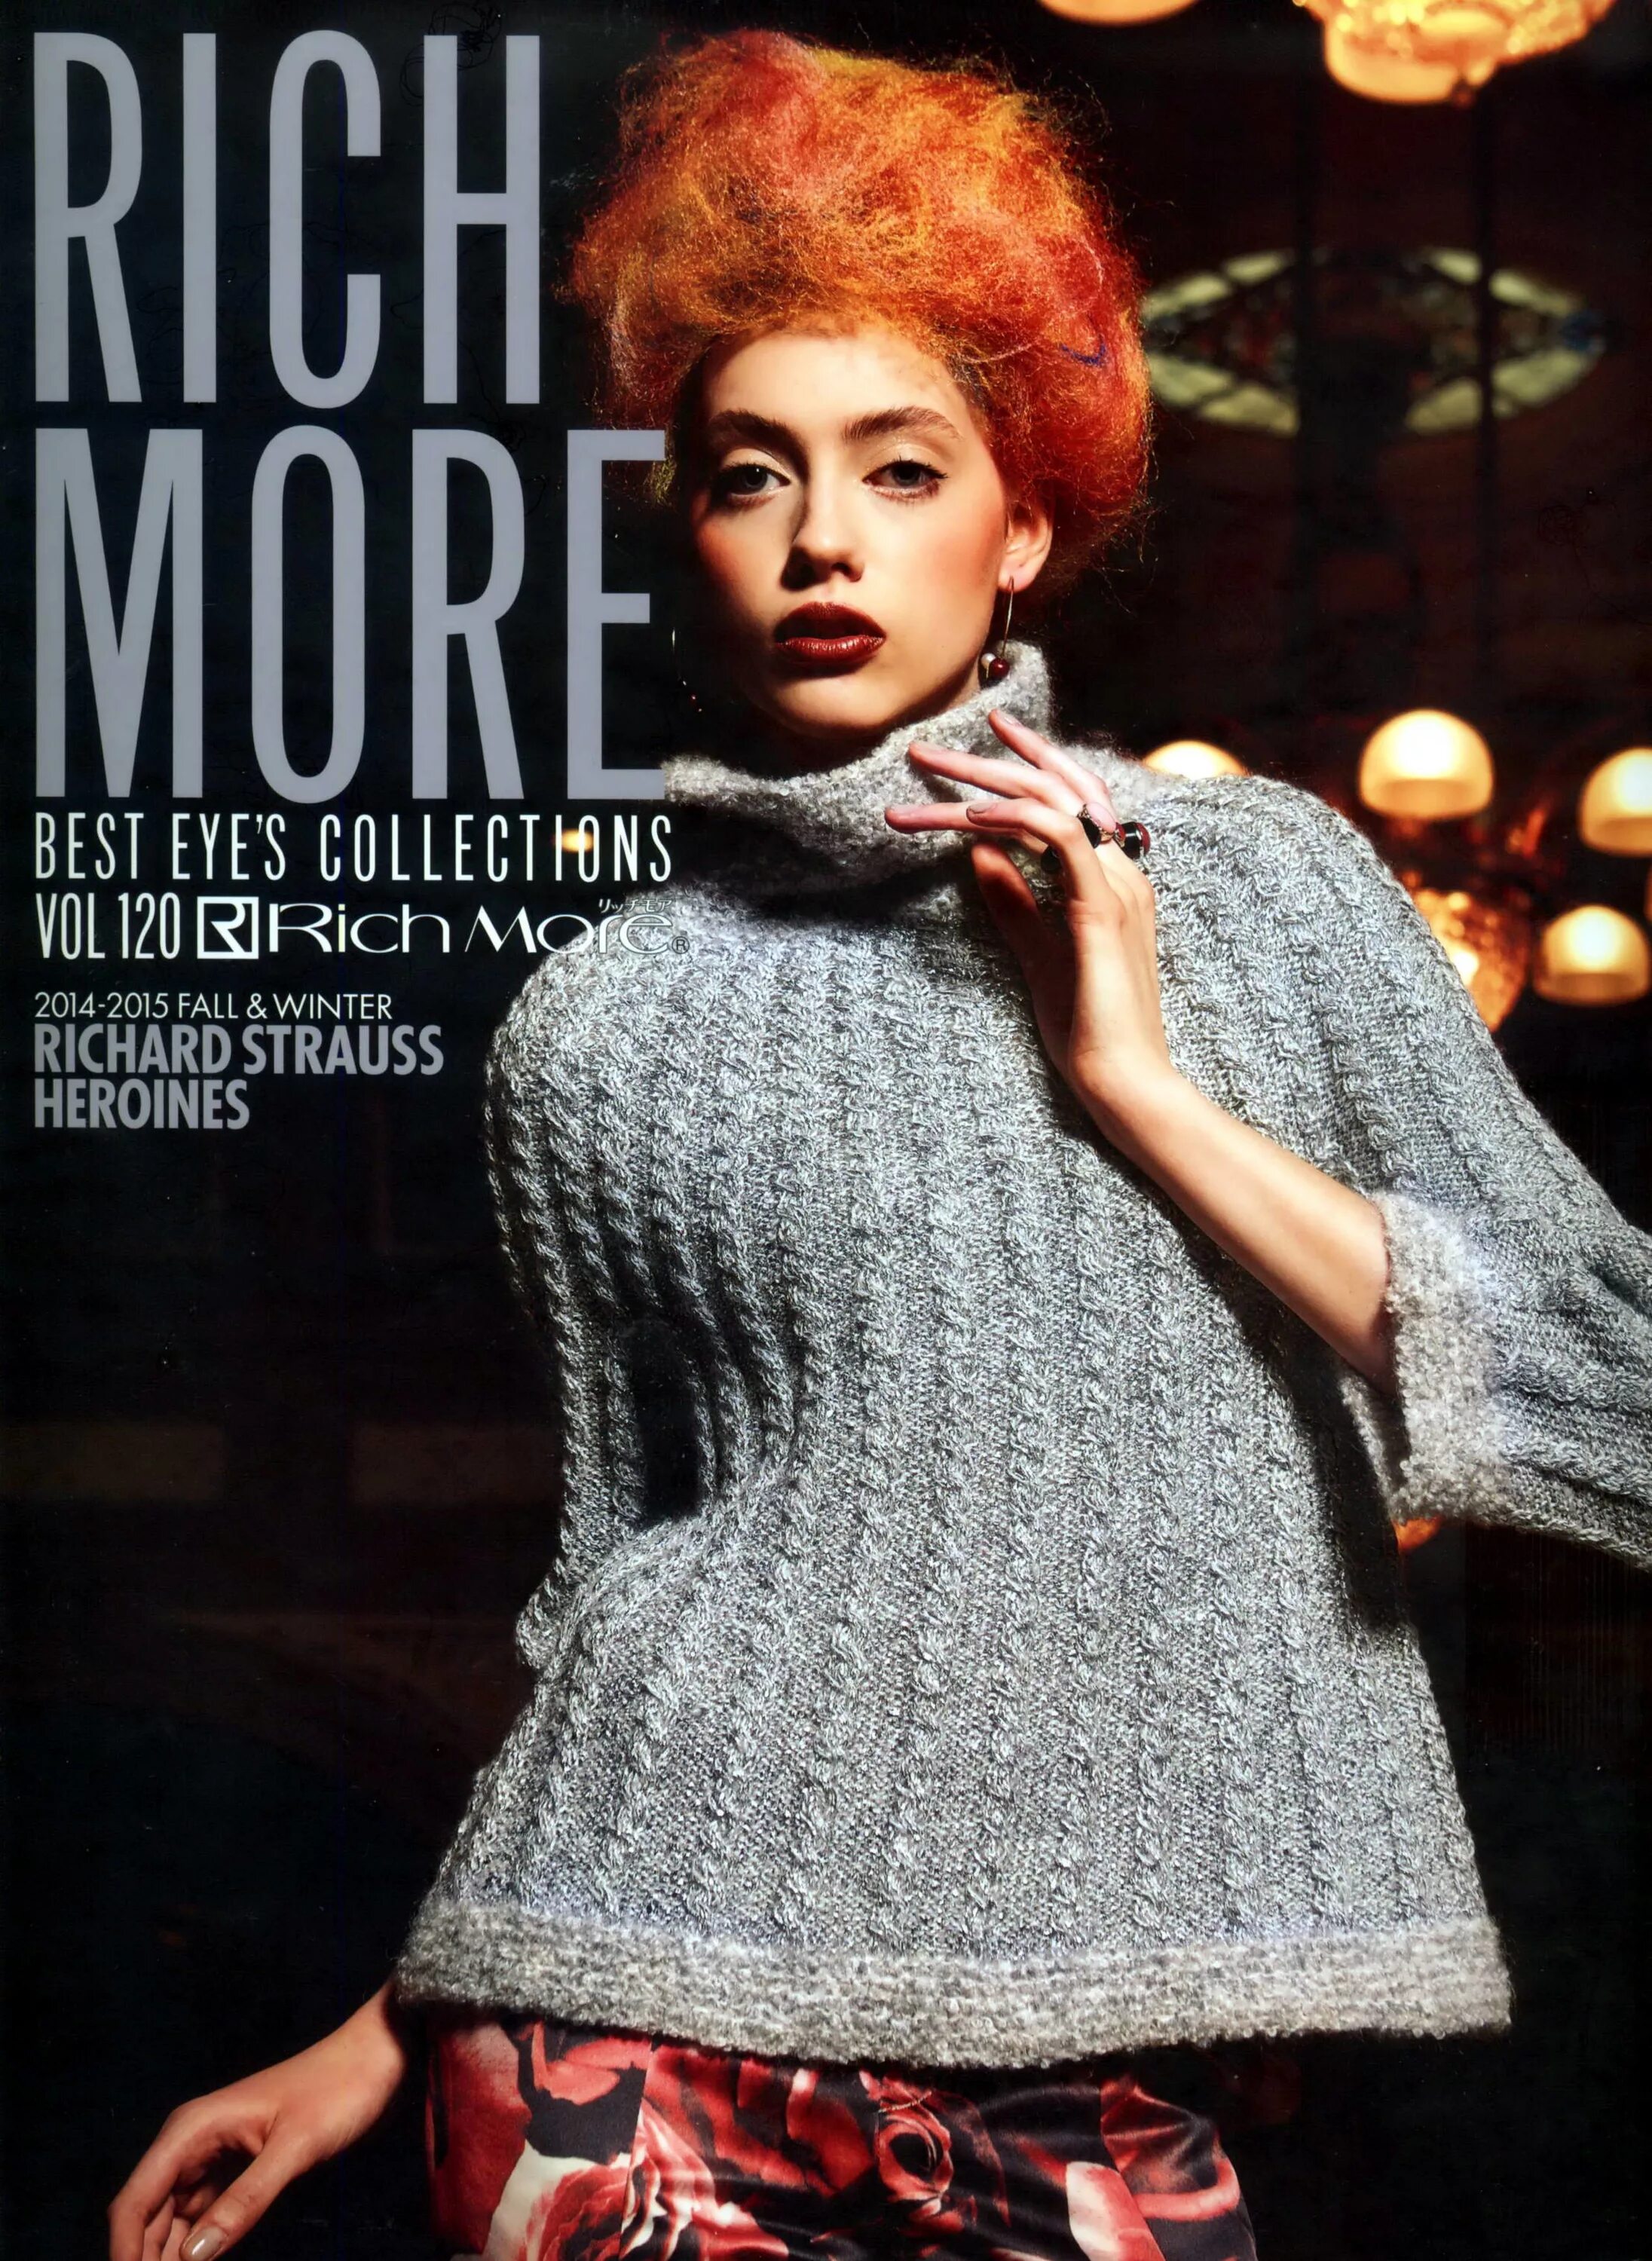 Knit журналы. Журнал вязание. Rich more журнал по вязанию. Rowan журнал по вязанию модели. Журнал Rich more 01 2000 вязание.